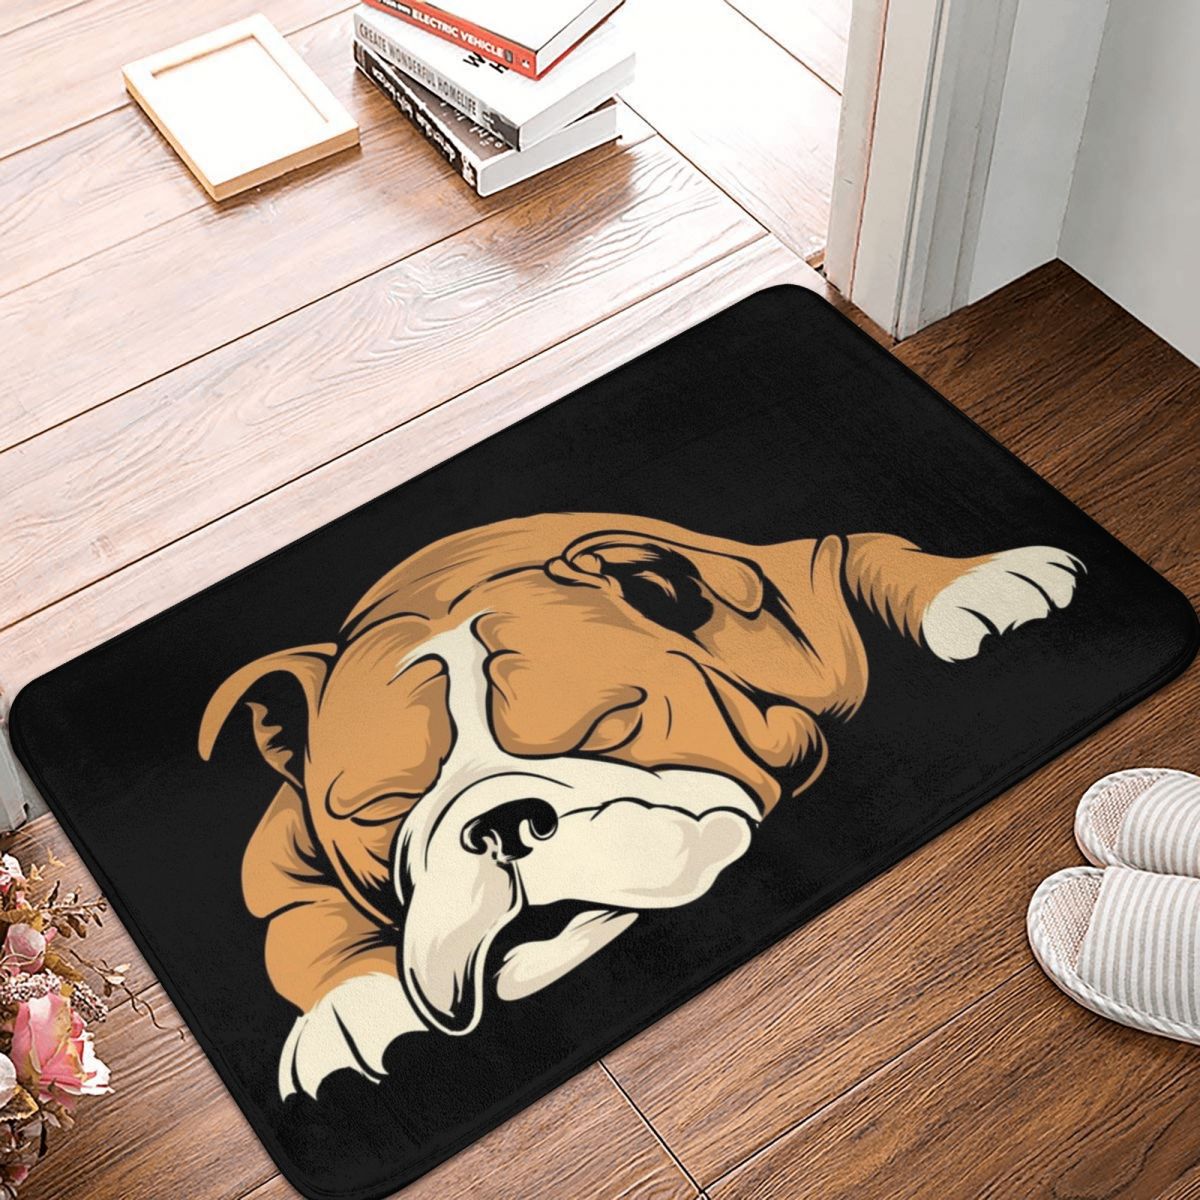 Funny Bulldog mats by Style's Bug - Style's Bug Sleeping Bulldog